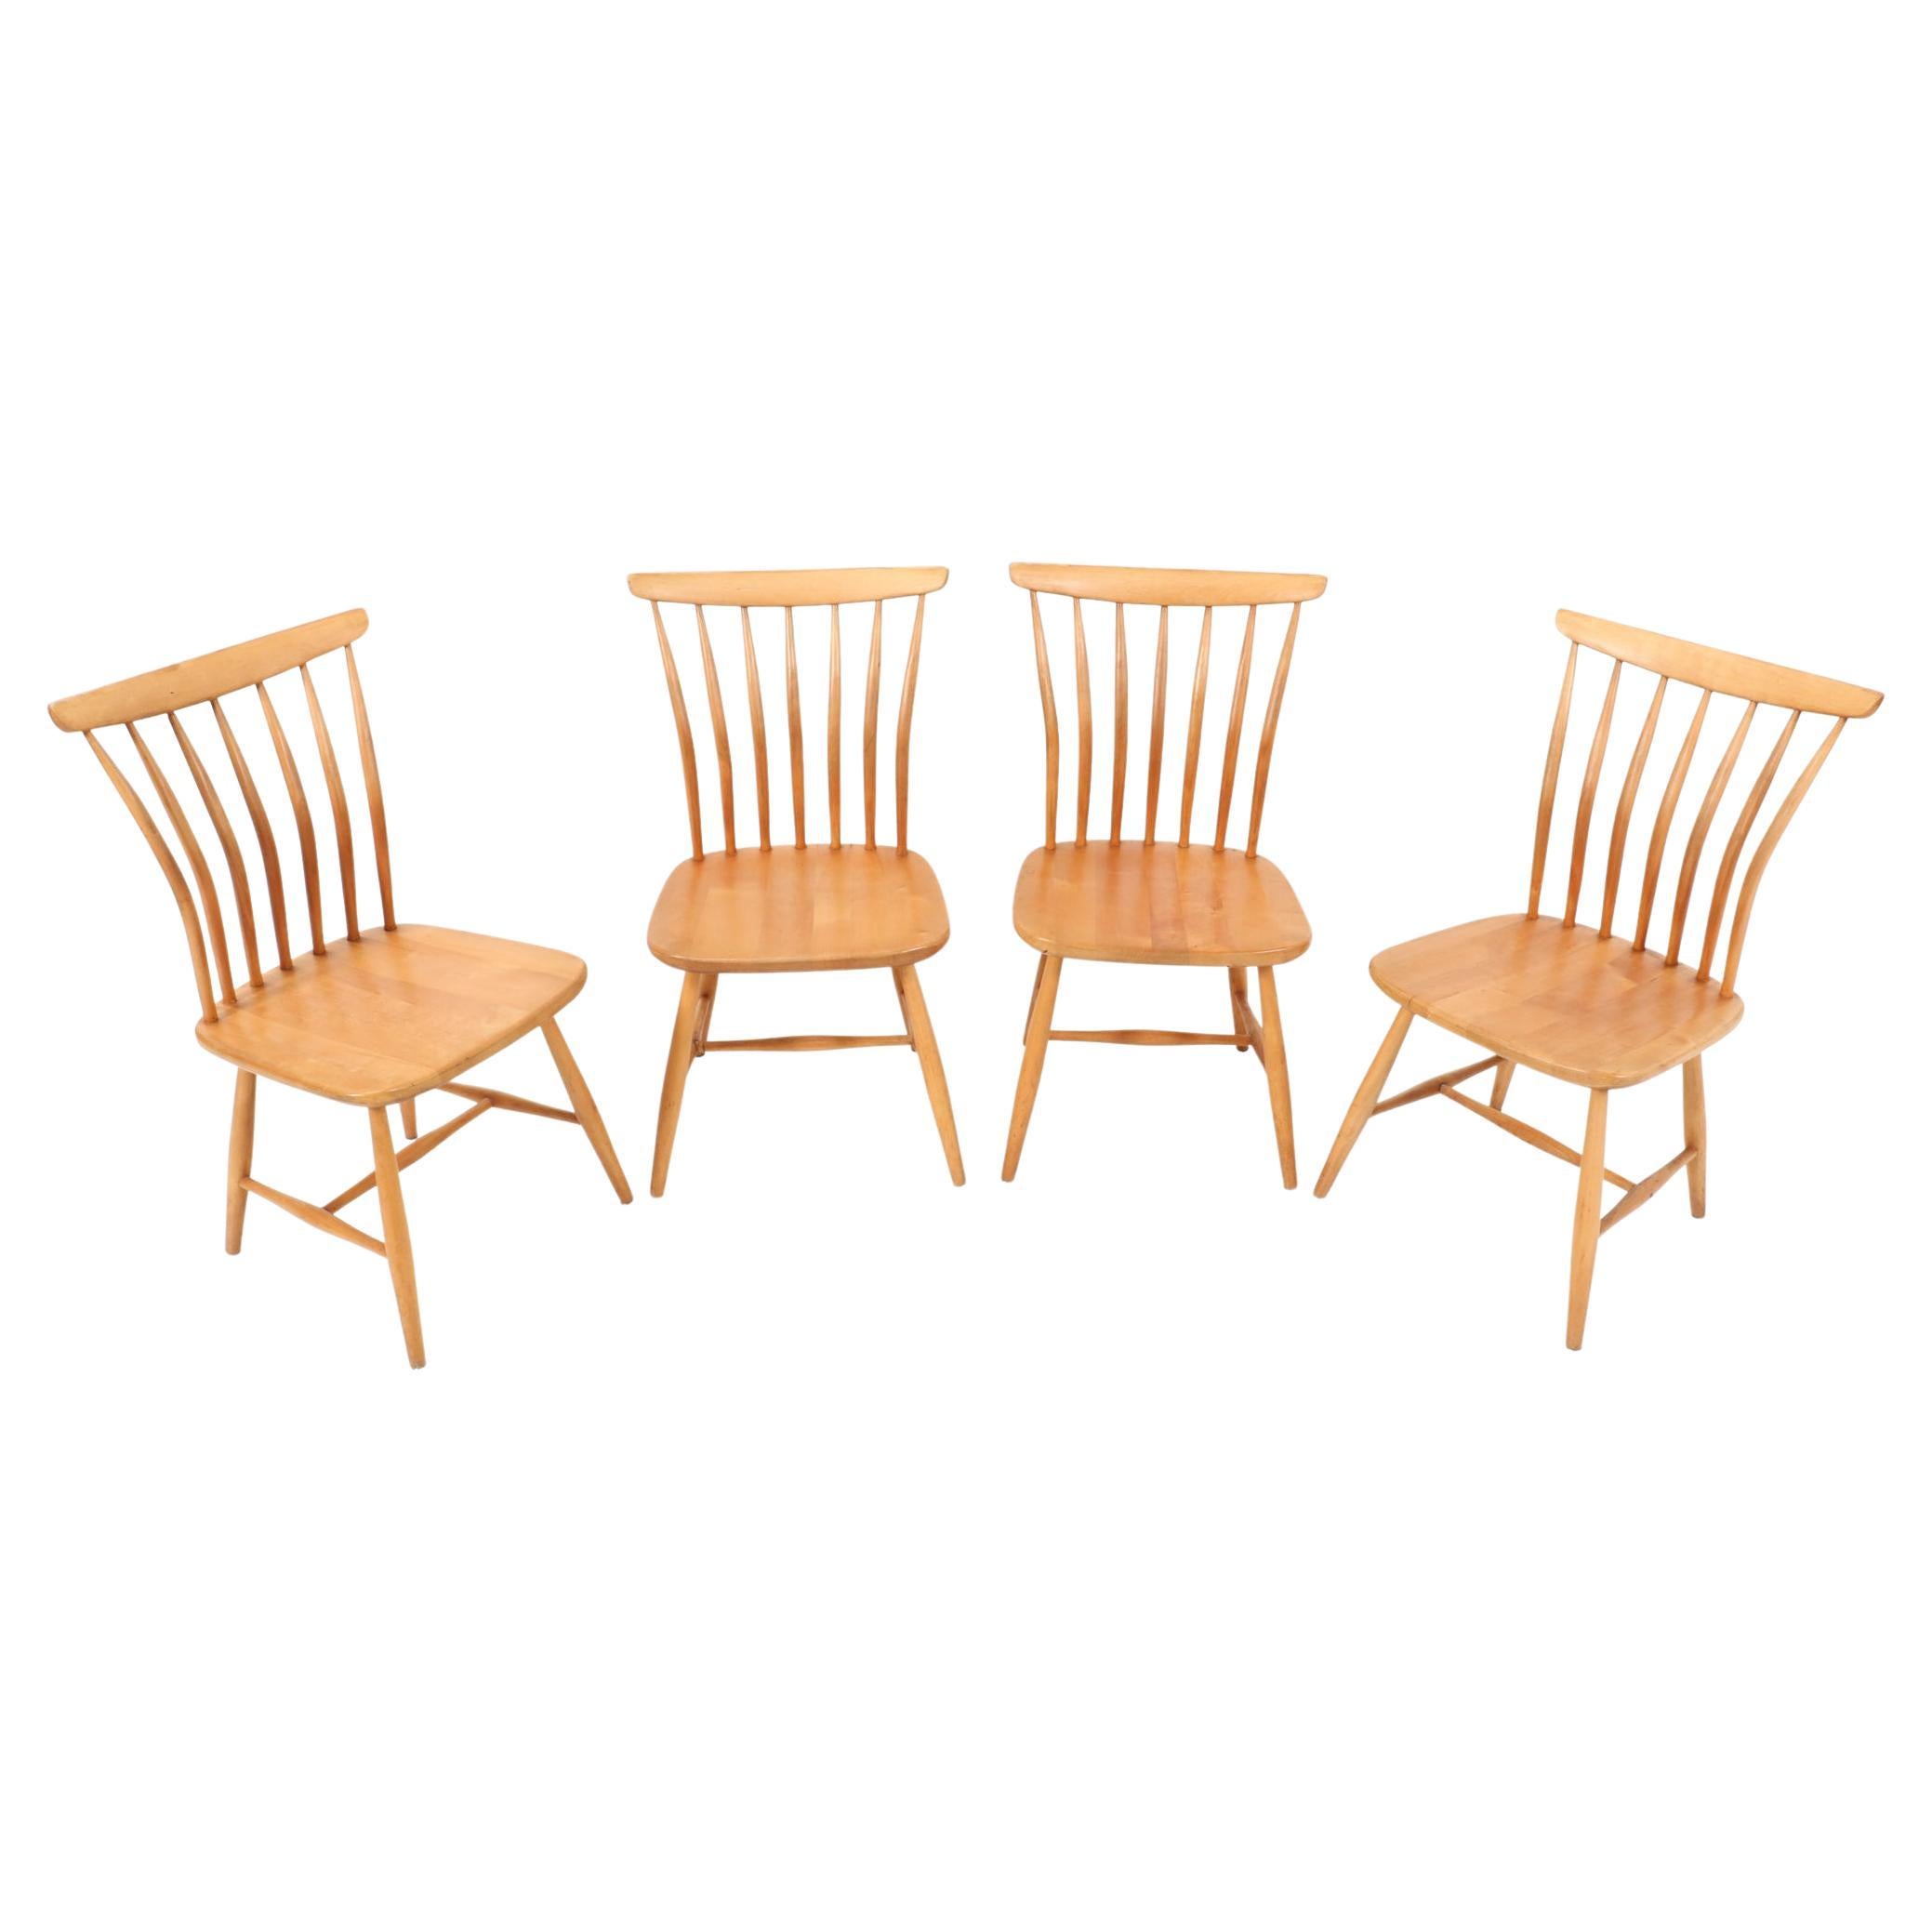 Four Mid-Century Modern Chairs by Bengt Akerblom & Gunnar Eklöf for Akerblom For Sale